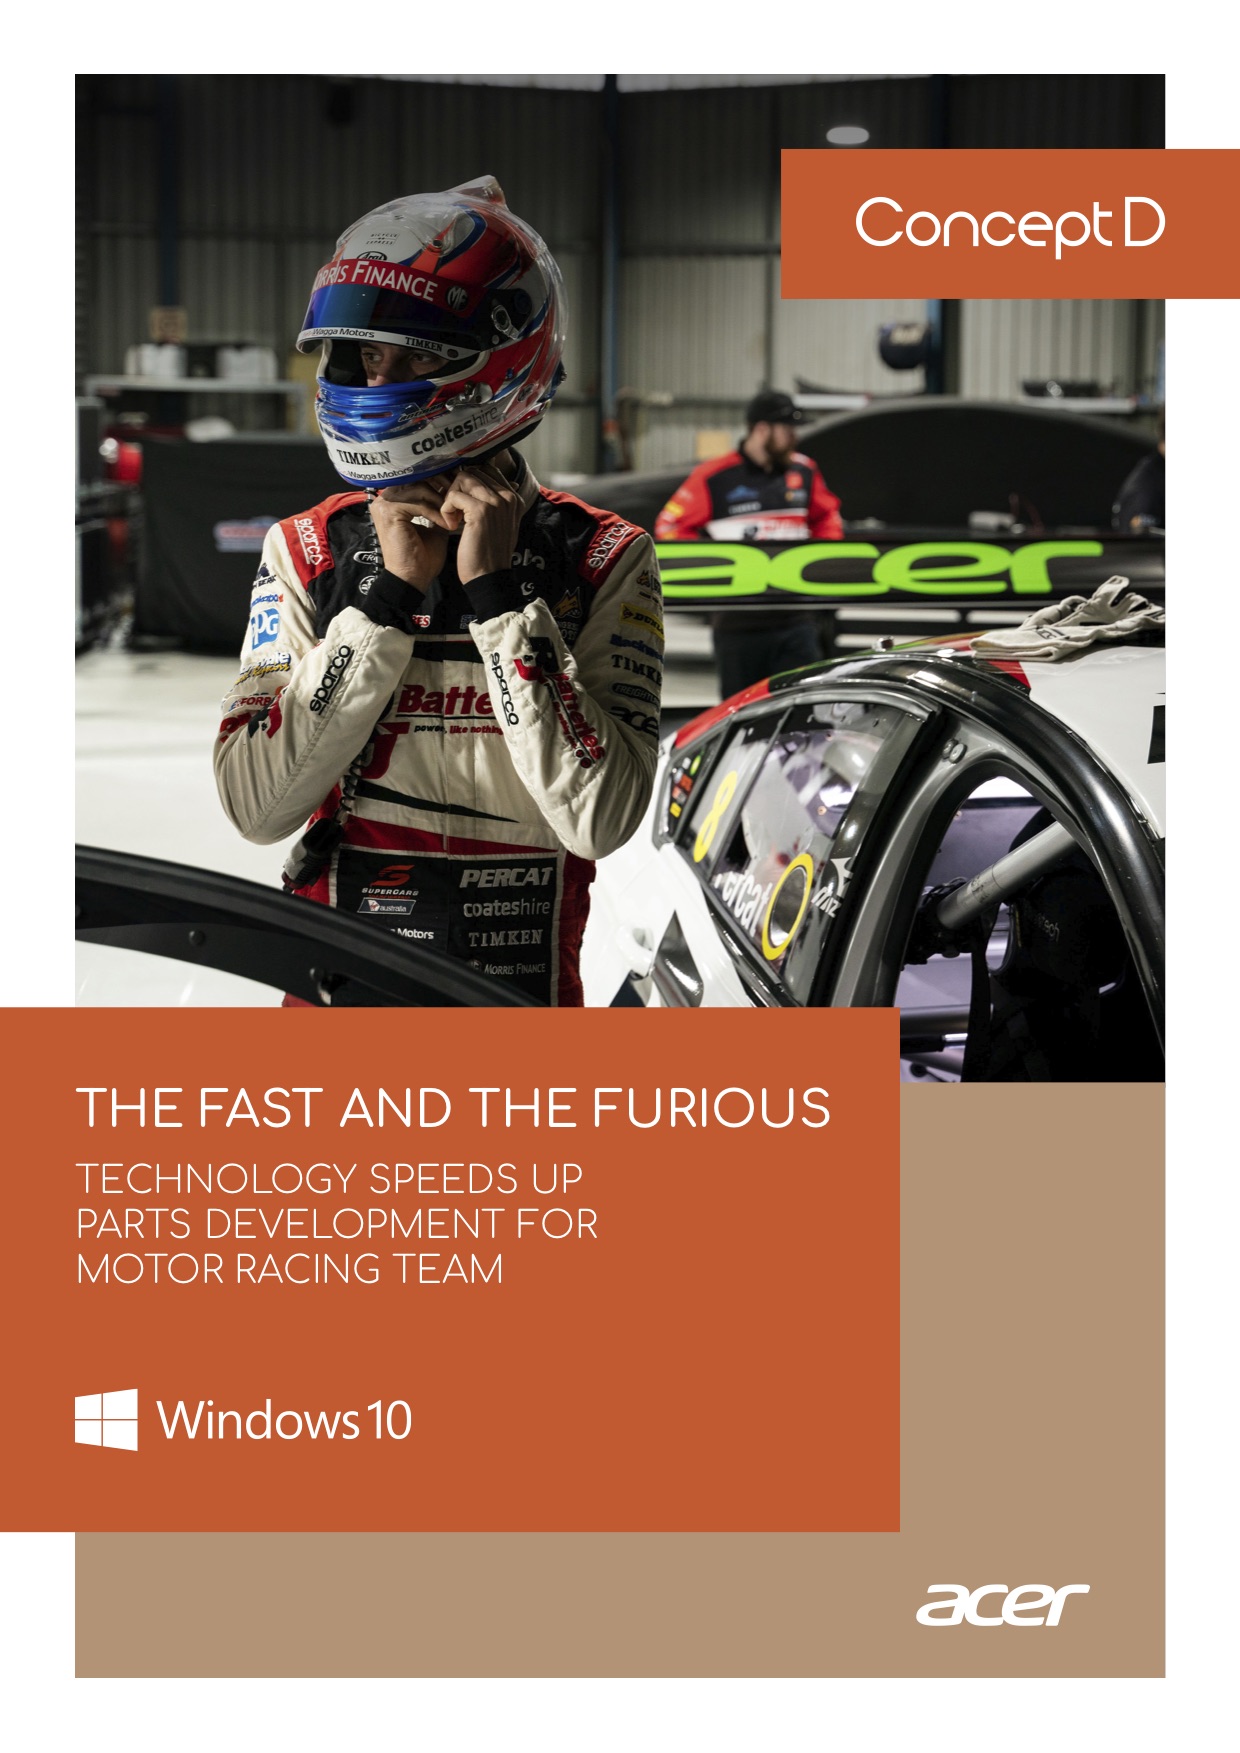 Technology speeds up parts development for motor racing team.